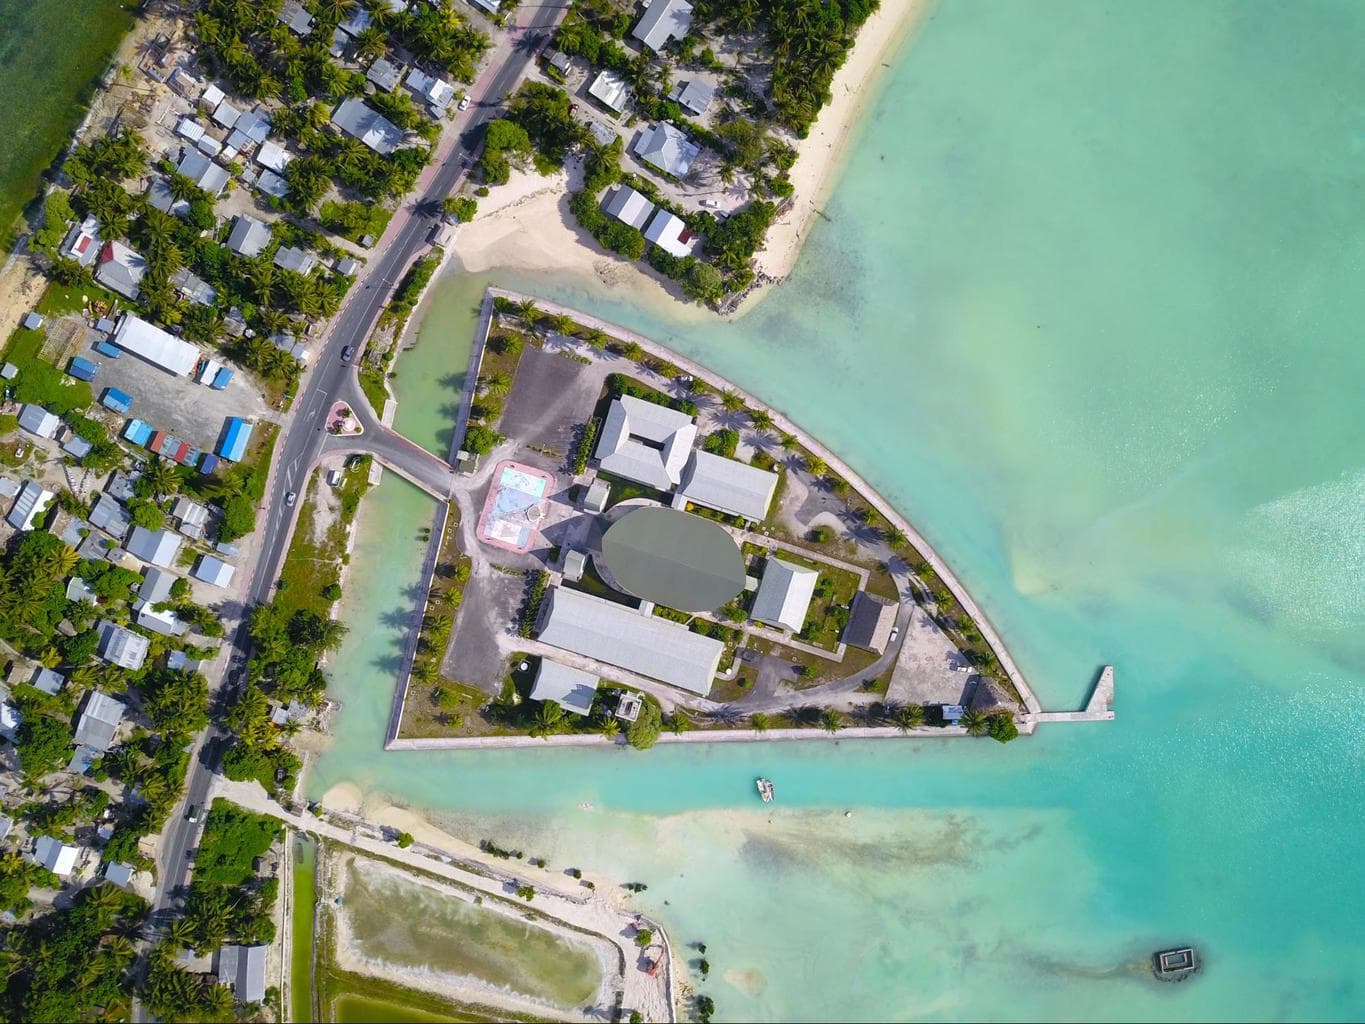 Drone shot of Kiribati Parliament House